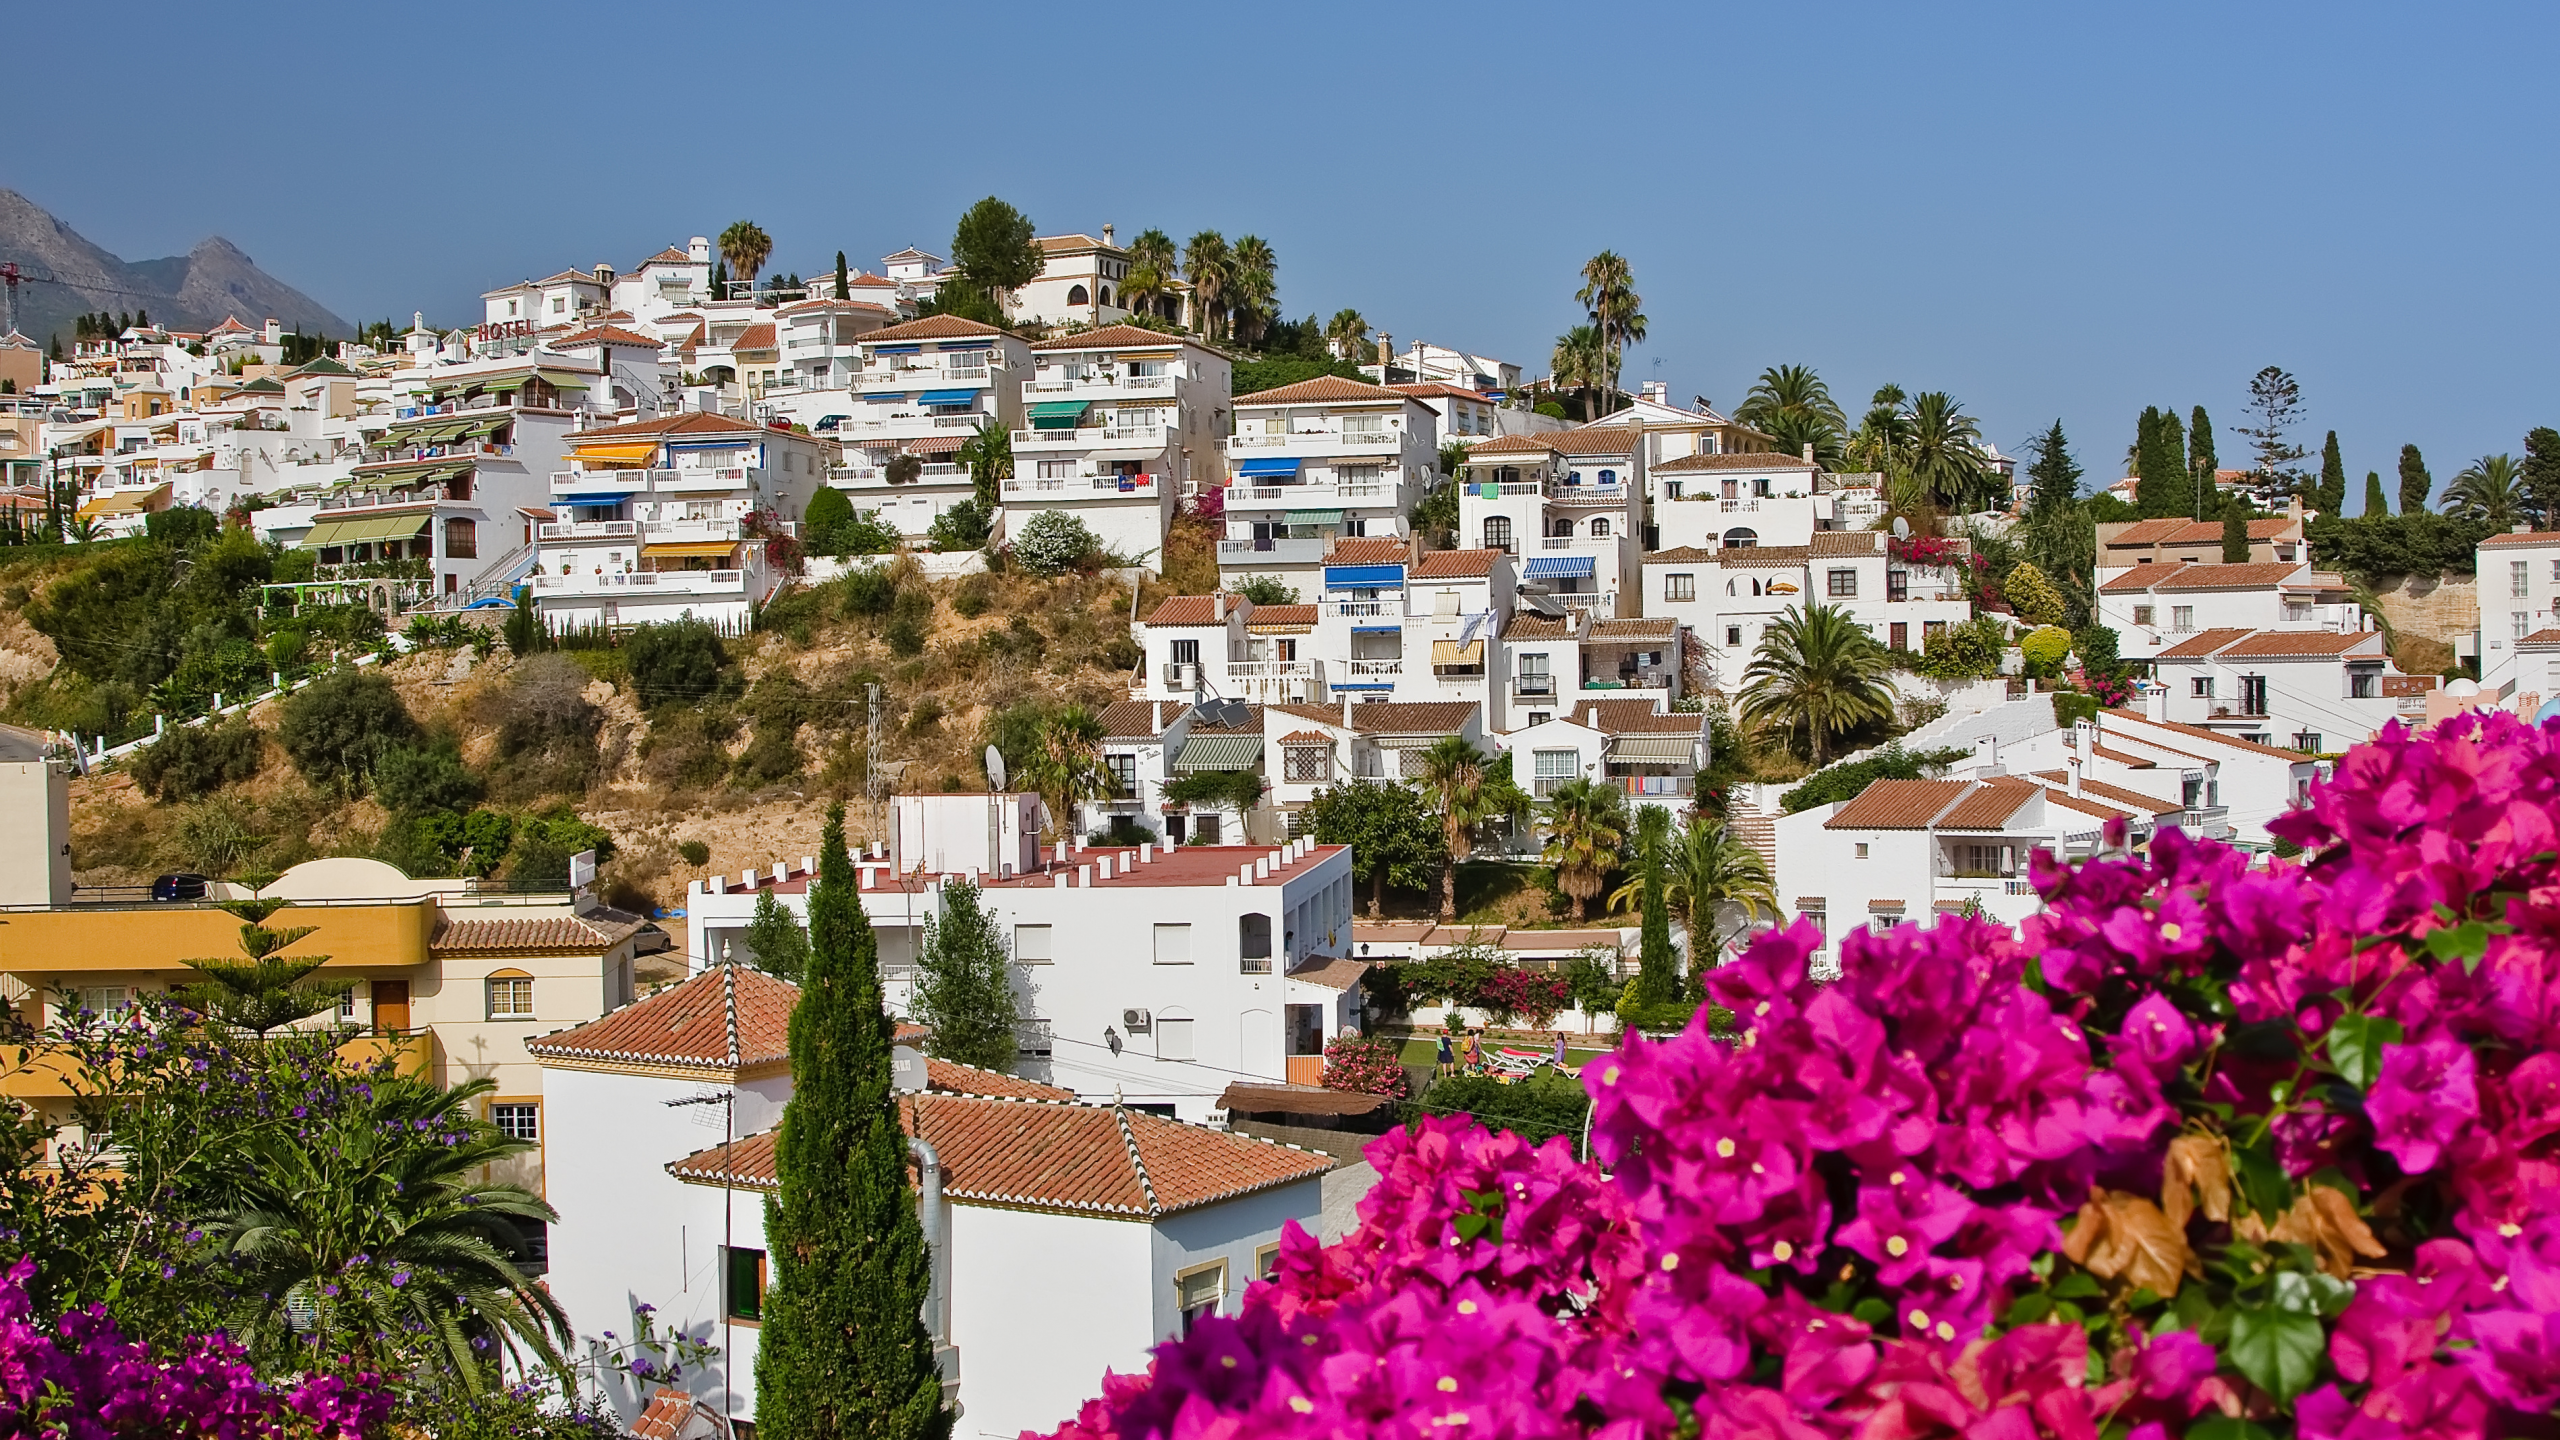 palms, flowers, sky, houses, spain, nerja, tress, spanish landscape